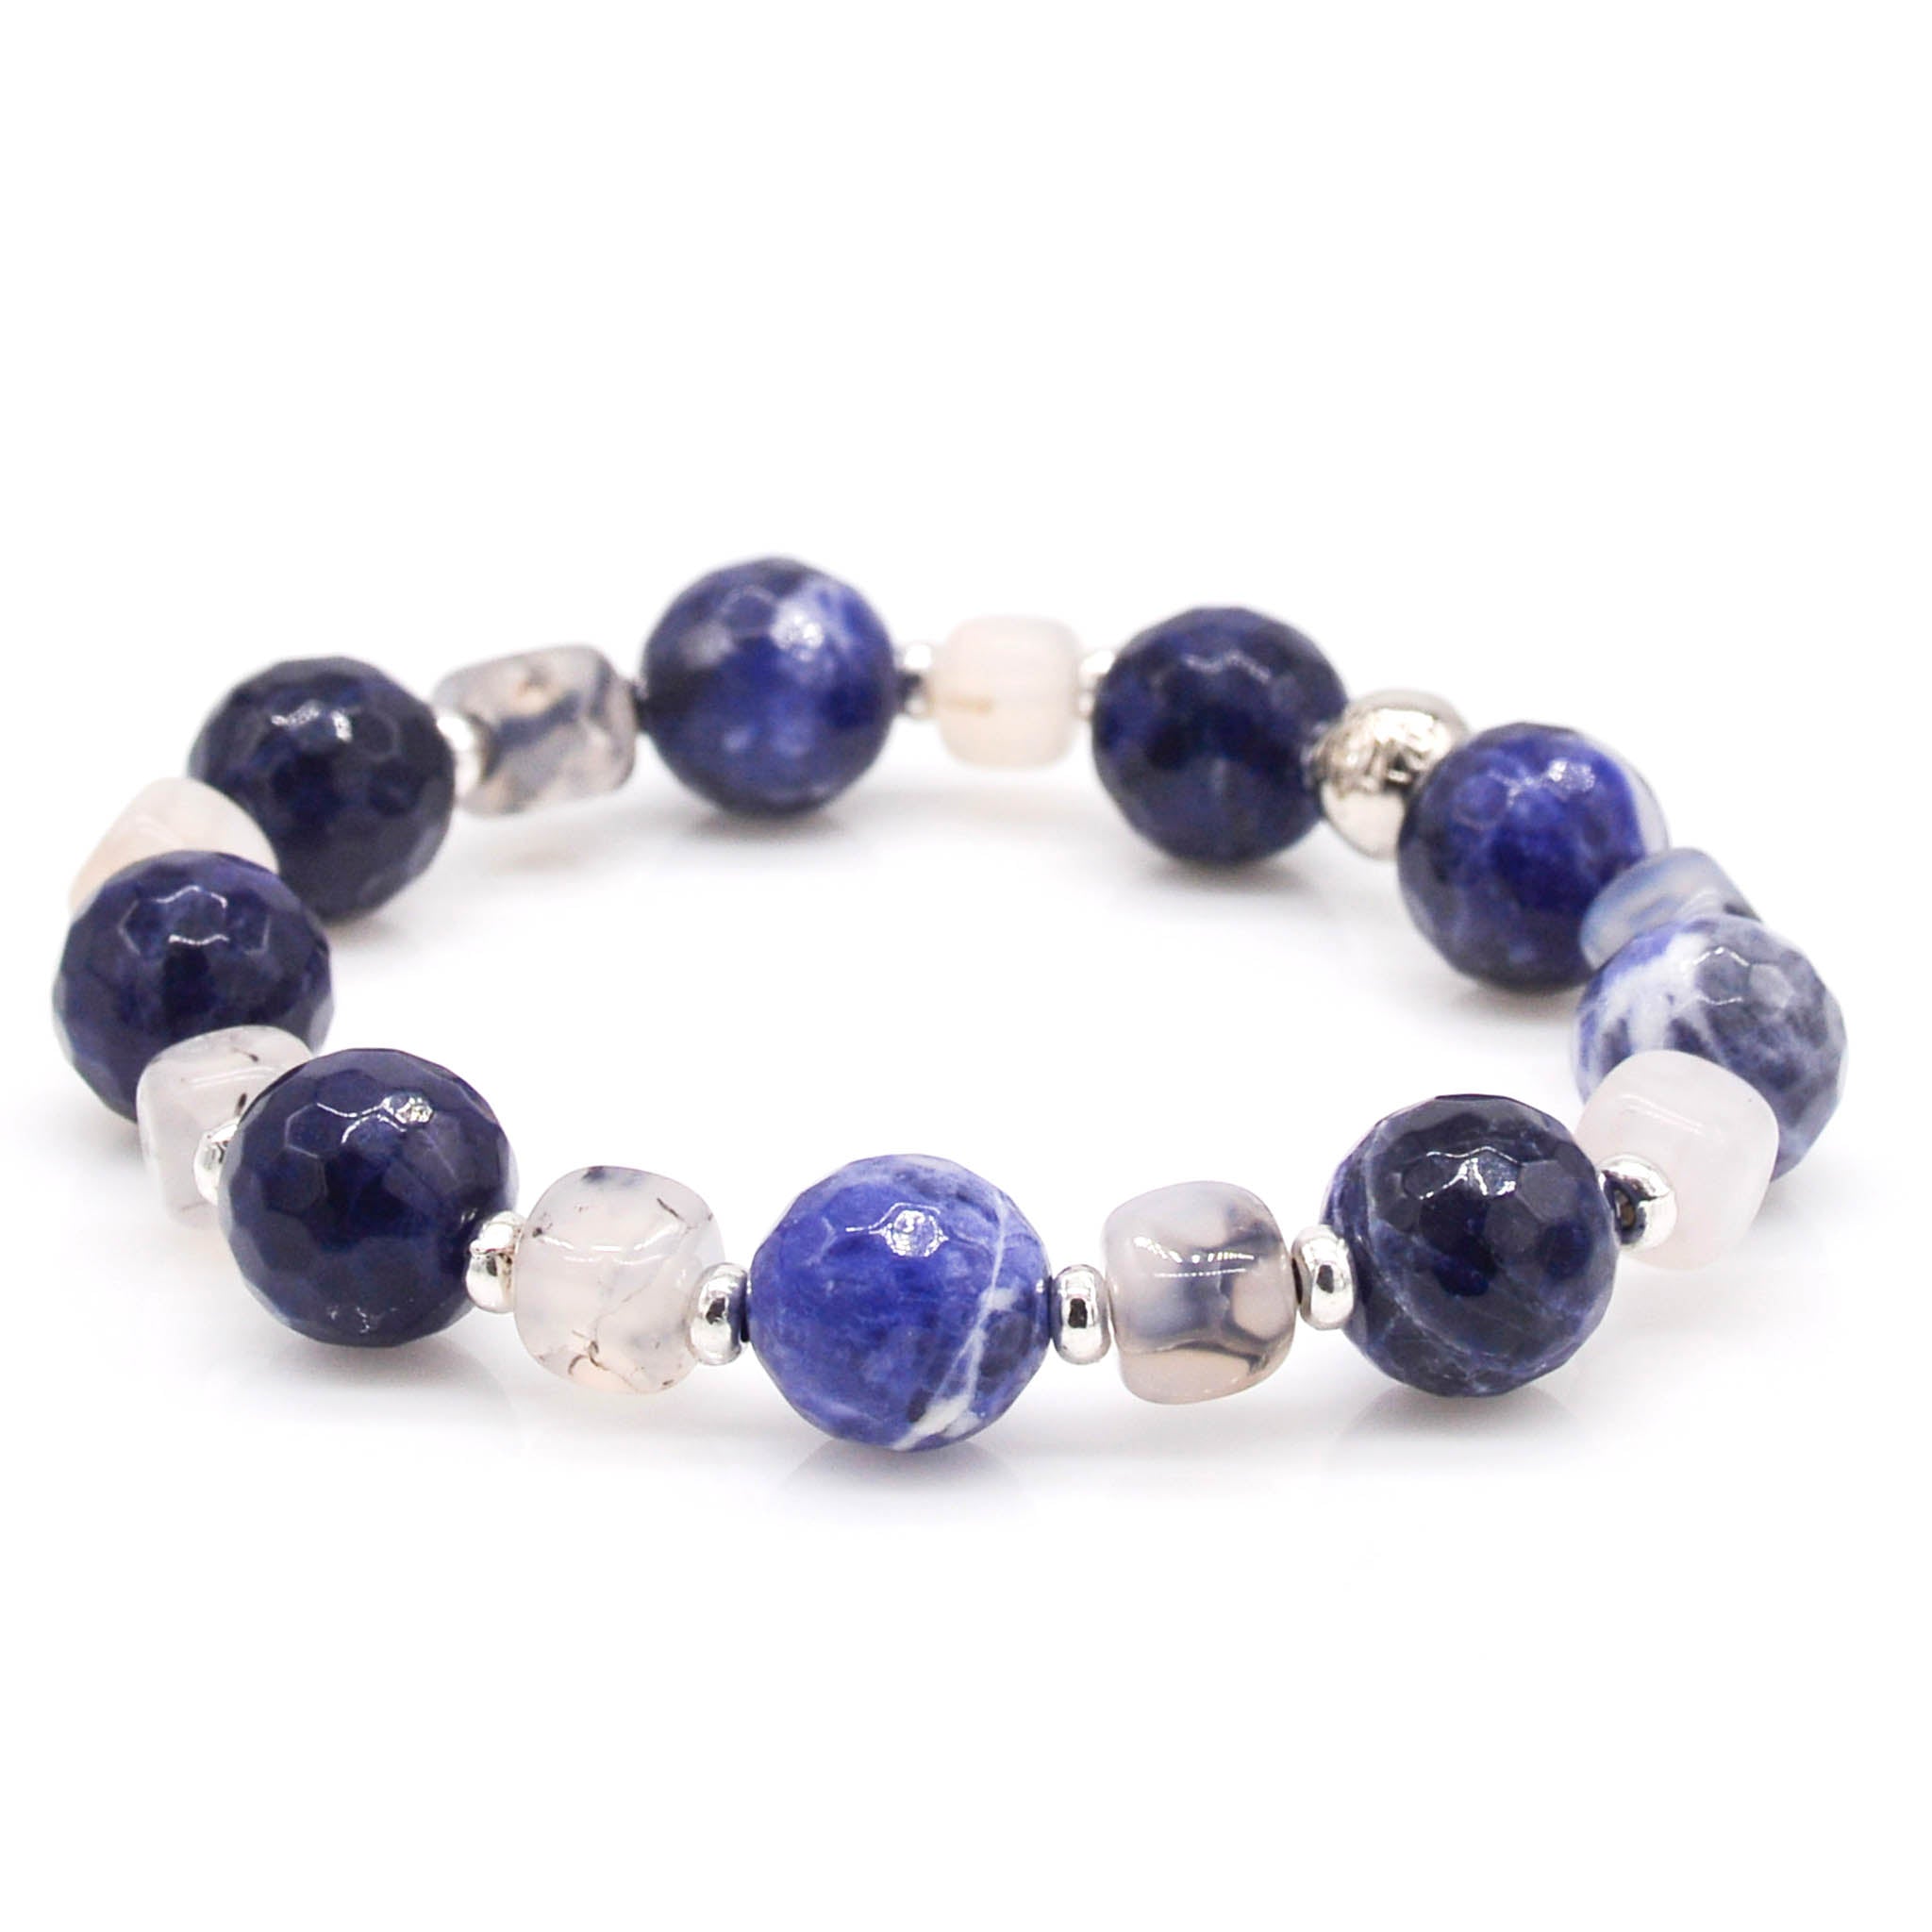 Blue sodalite and white dragon agate bracelet